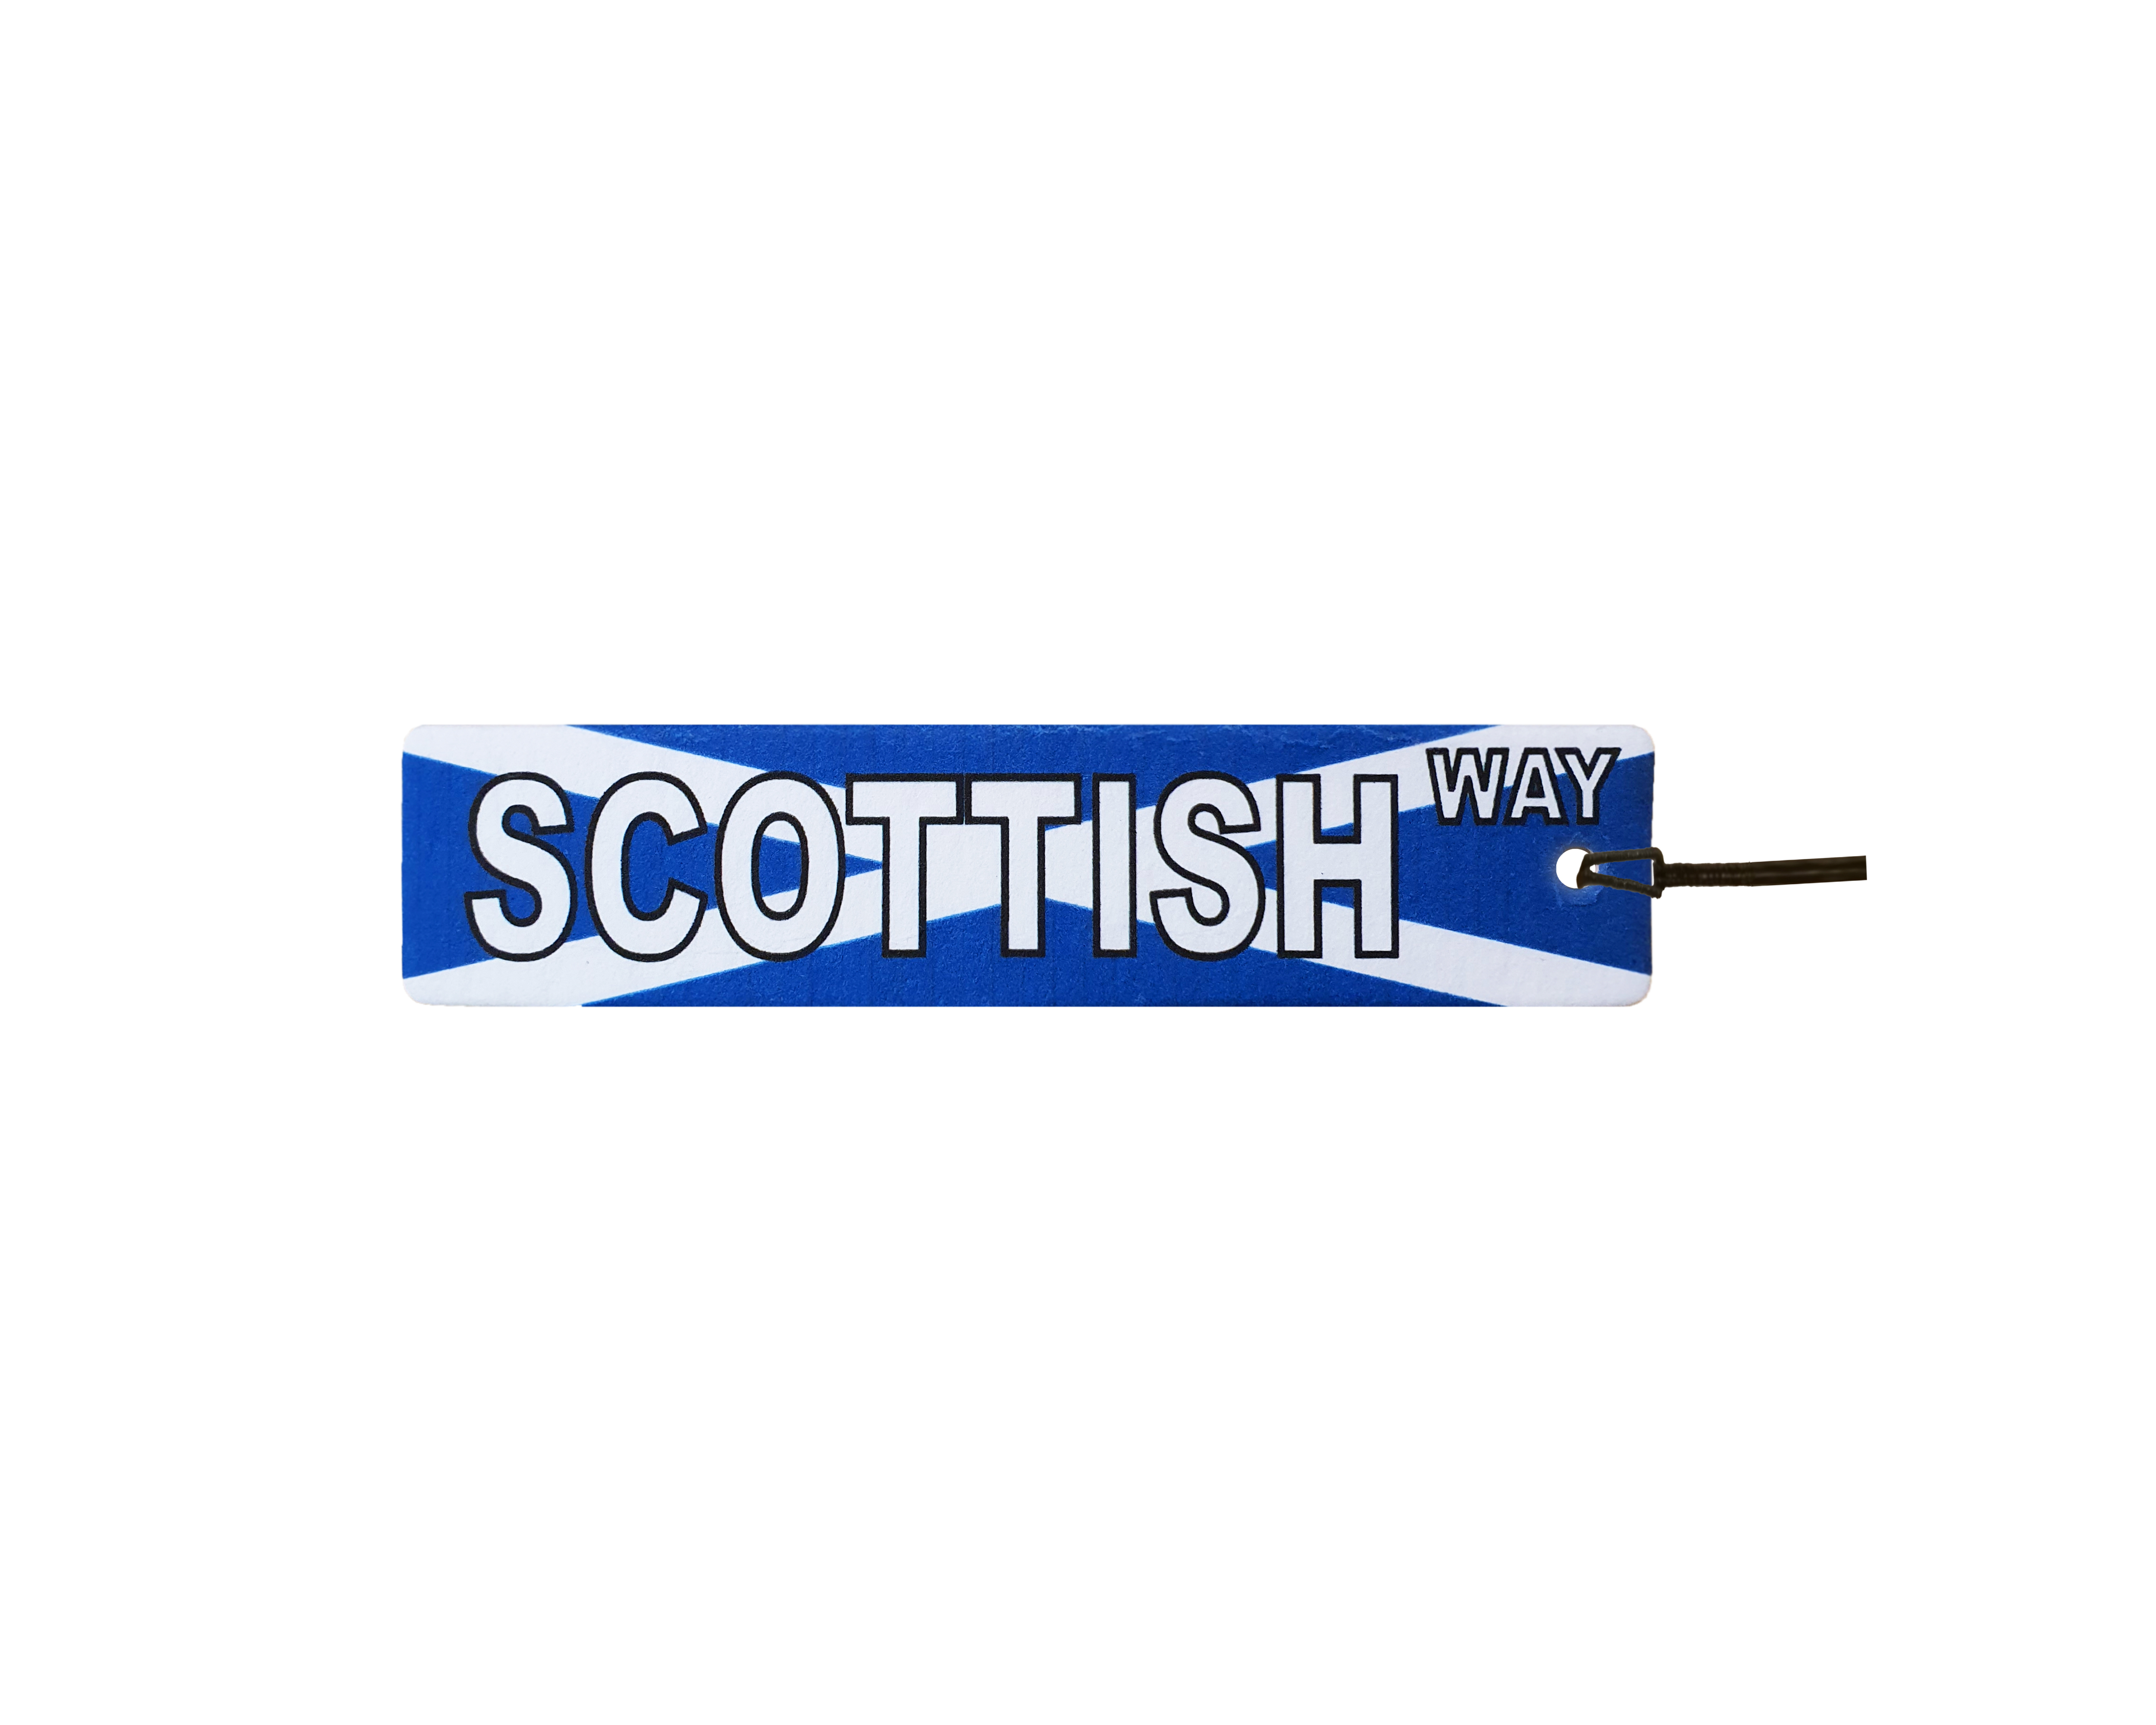 Scottish Way Street Sign